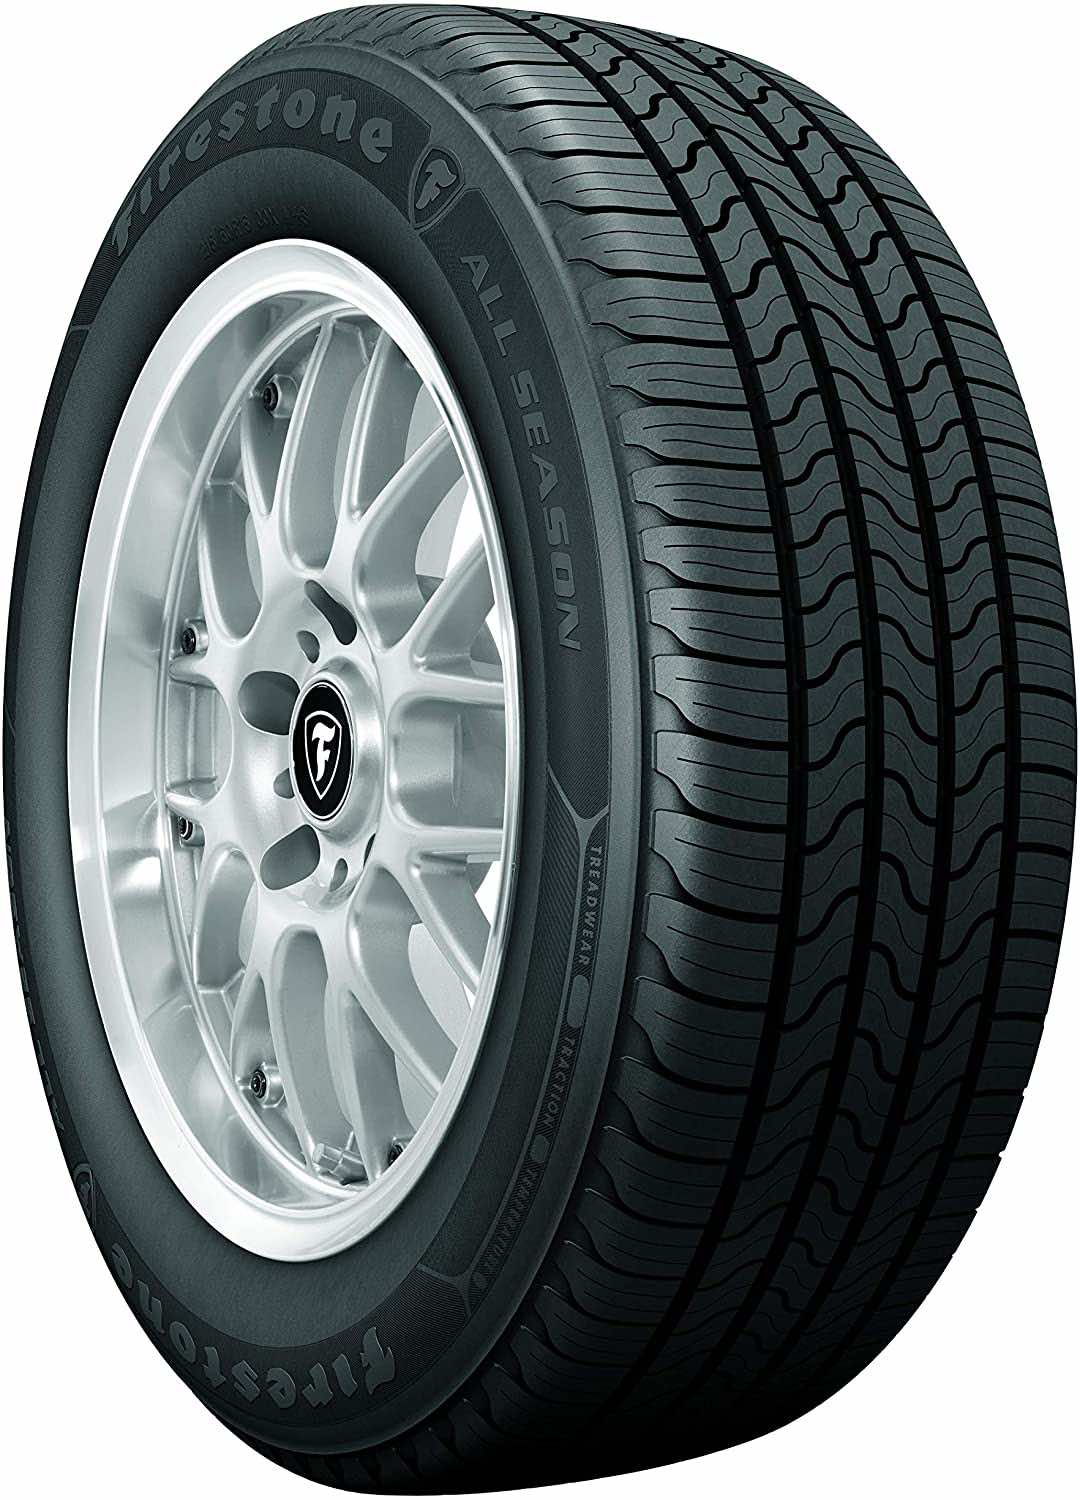 10-best-tires-for-hyundai-santa-fe-wonderful-engineering